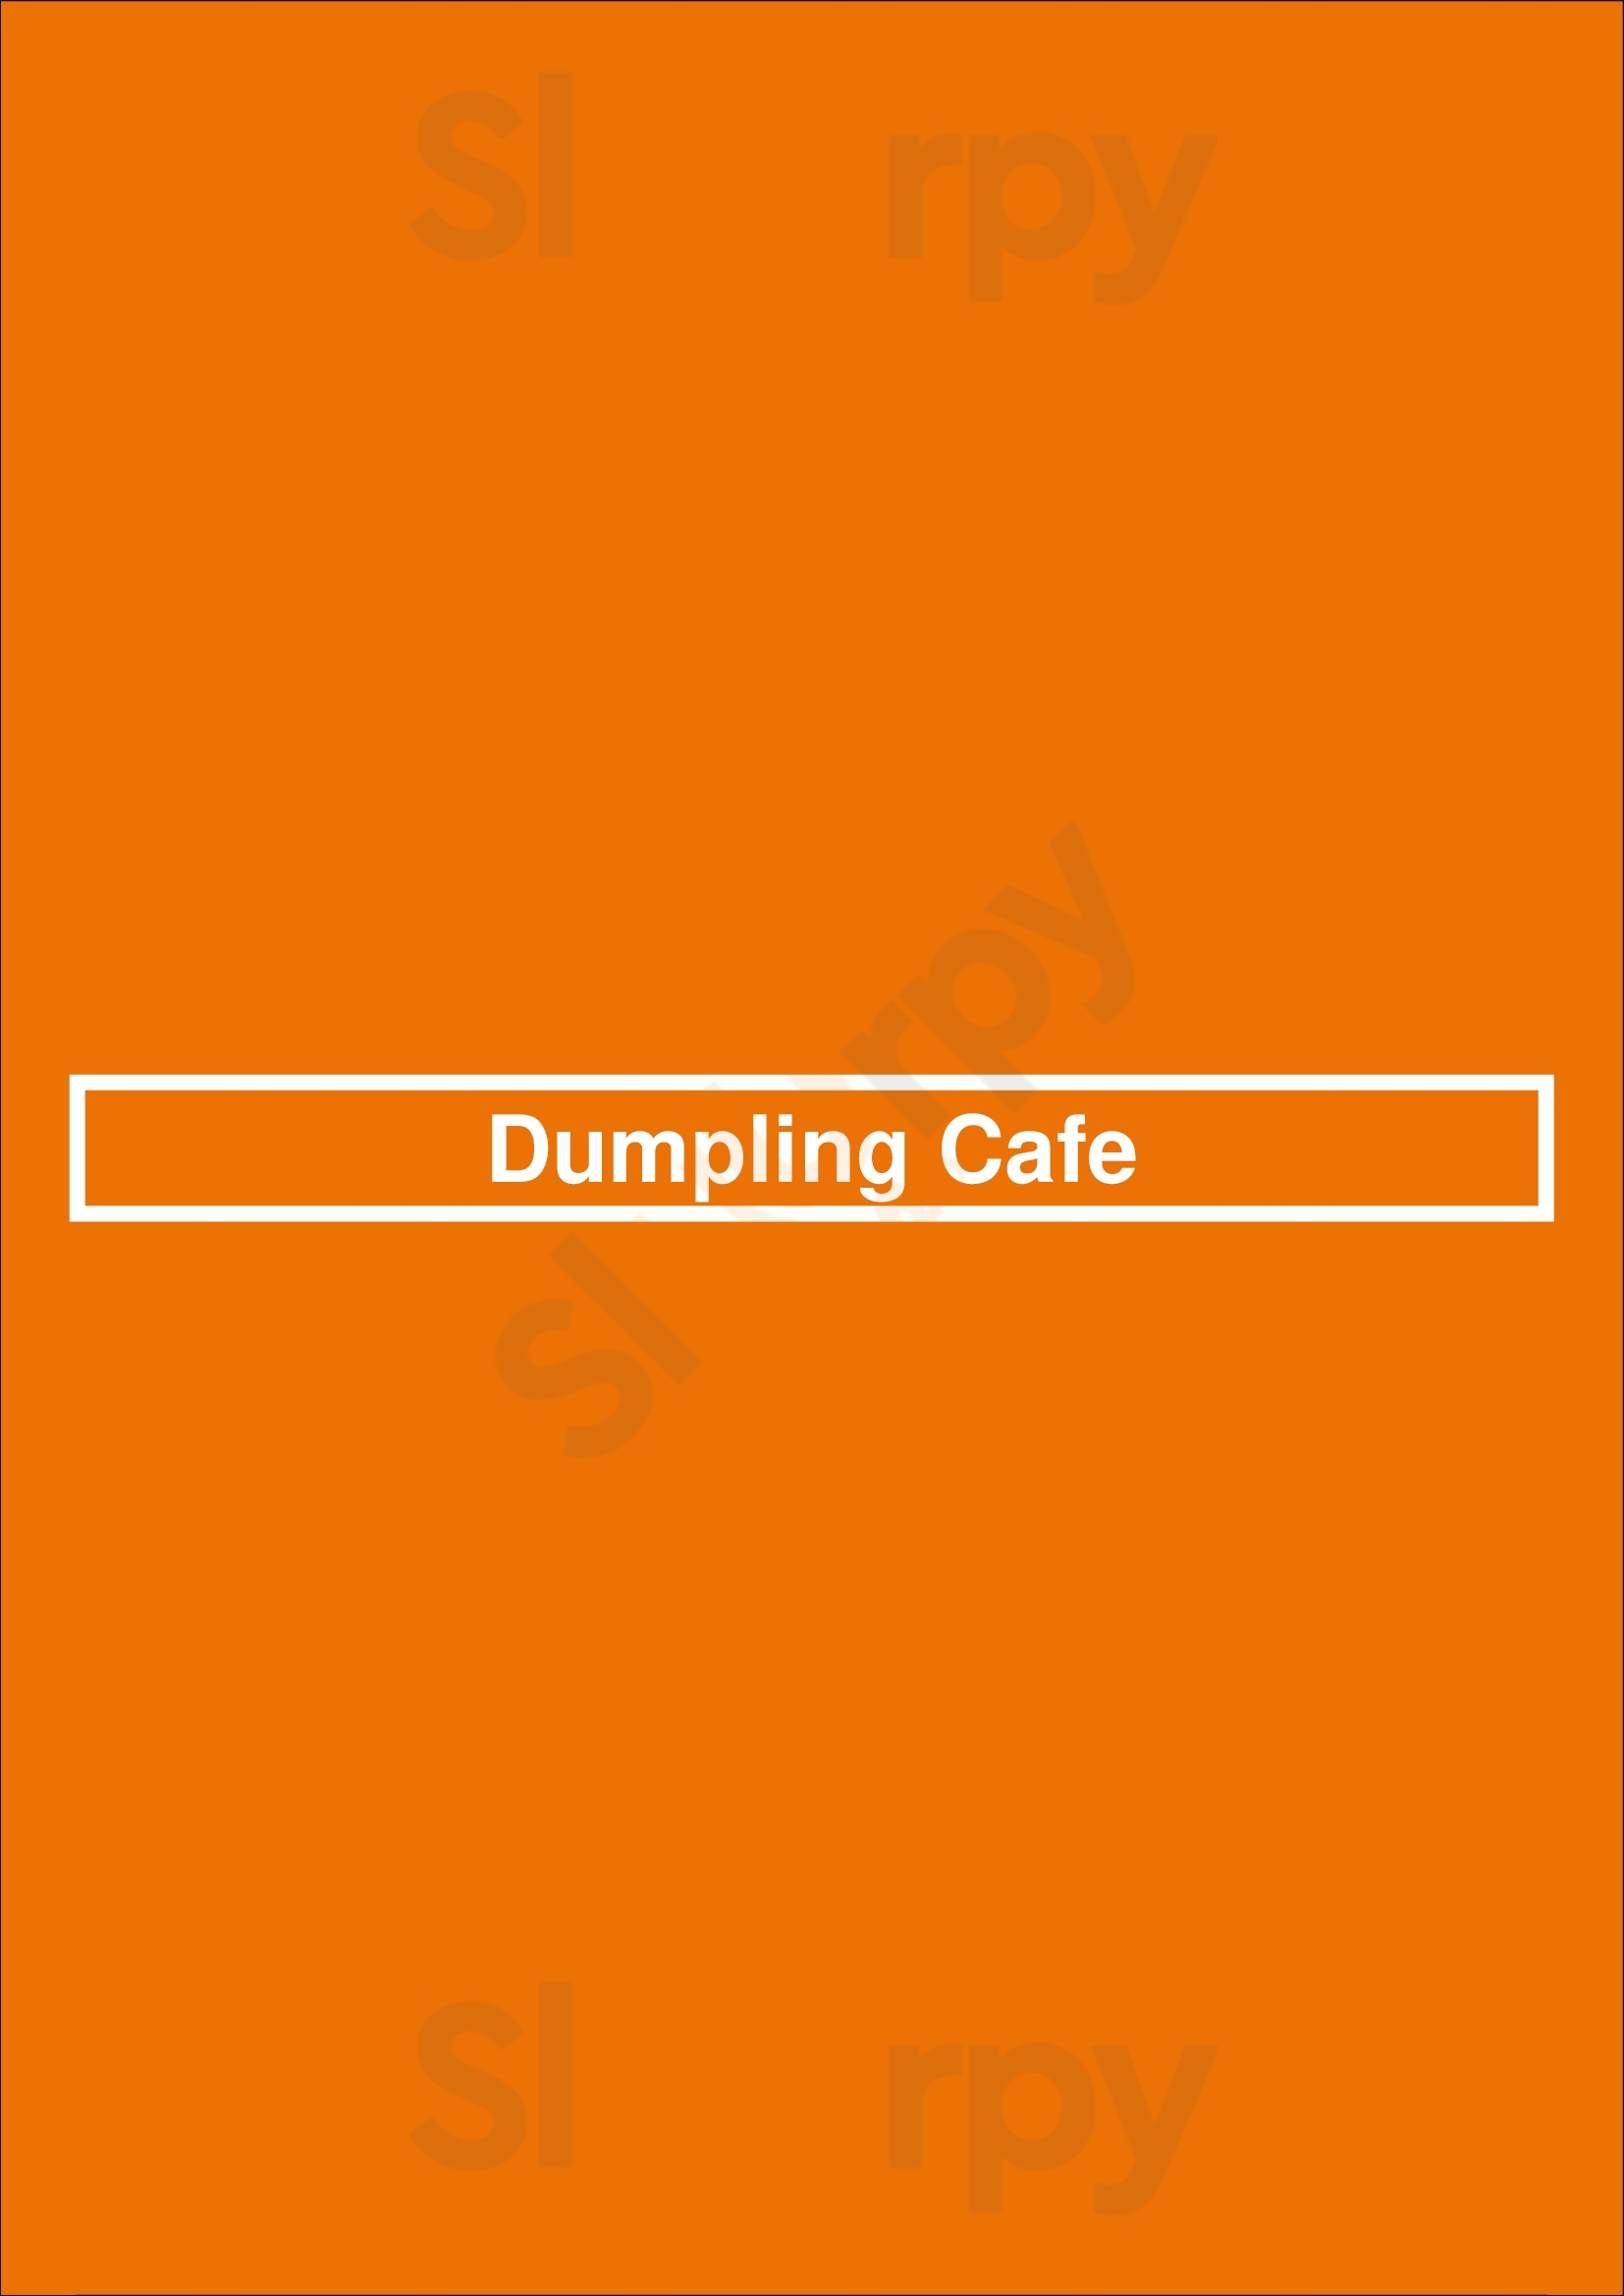 Dumpling Cafe Boston Menu - 1